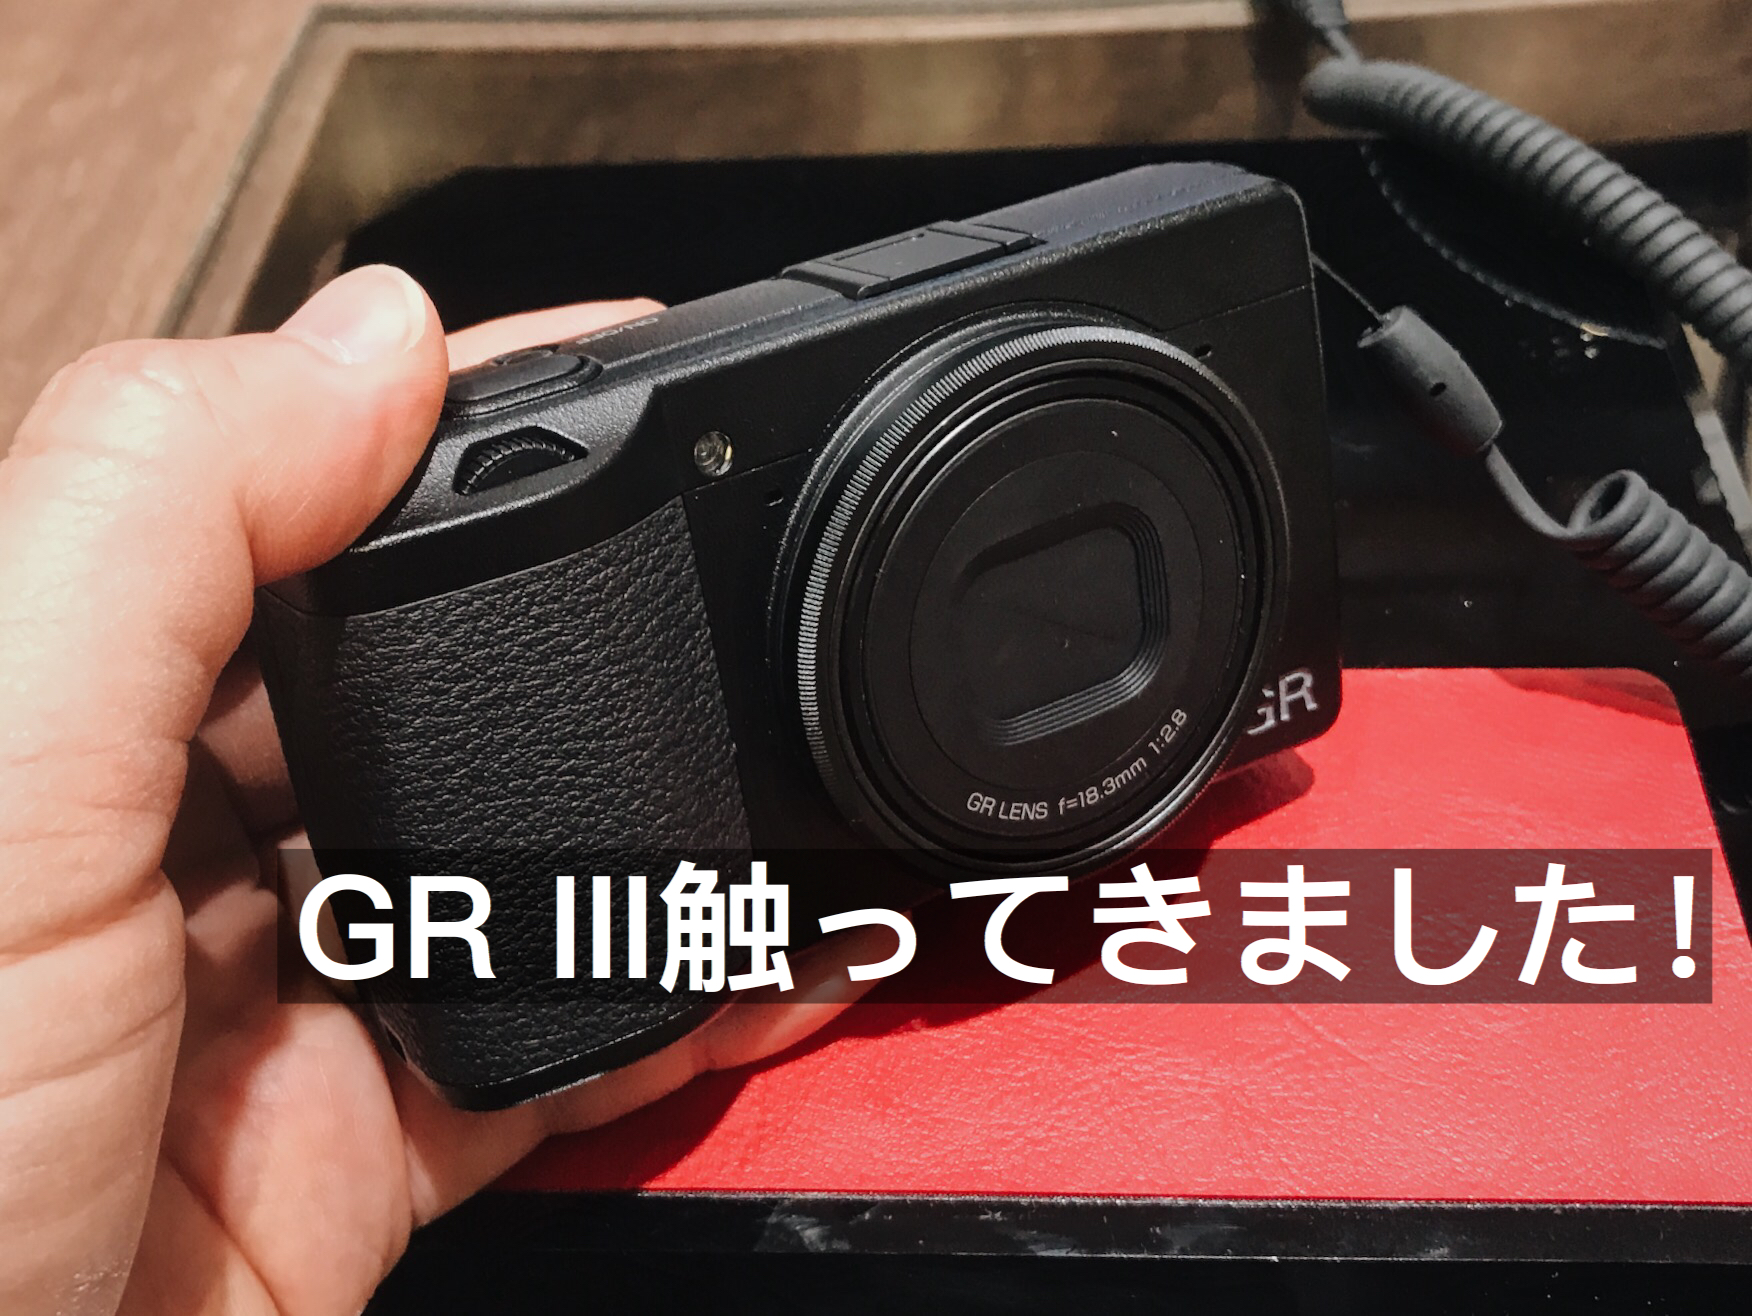 GRIII(GR3)のおすすめアクセサリー | Photo Journal PRESS